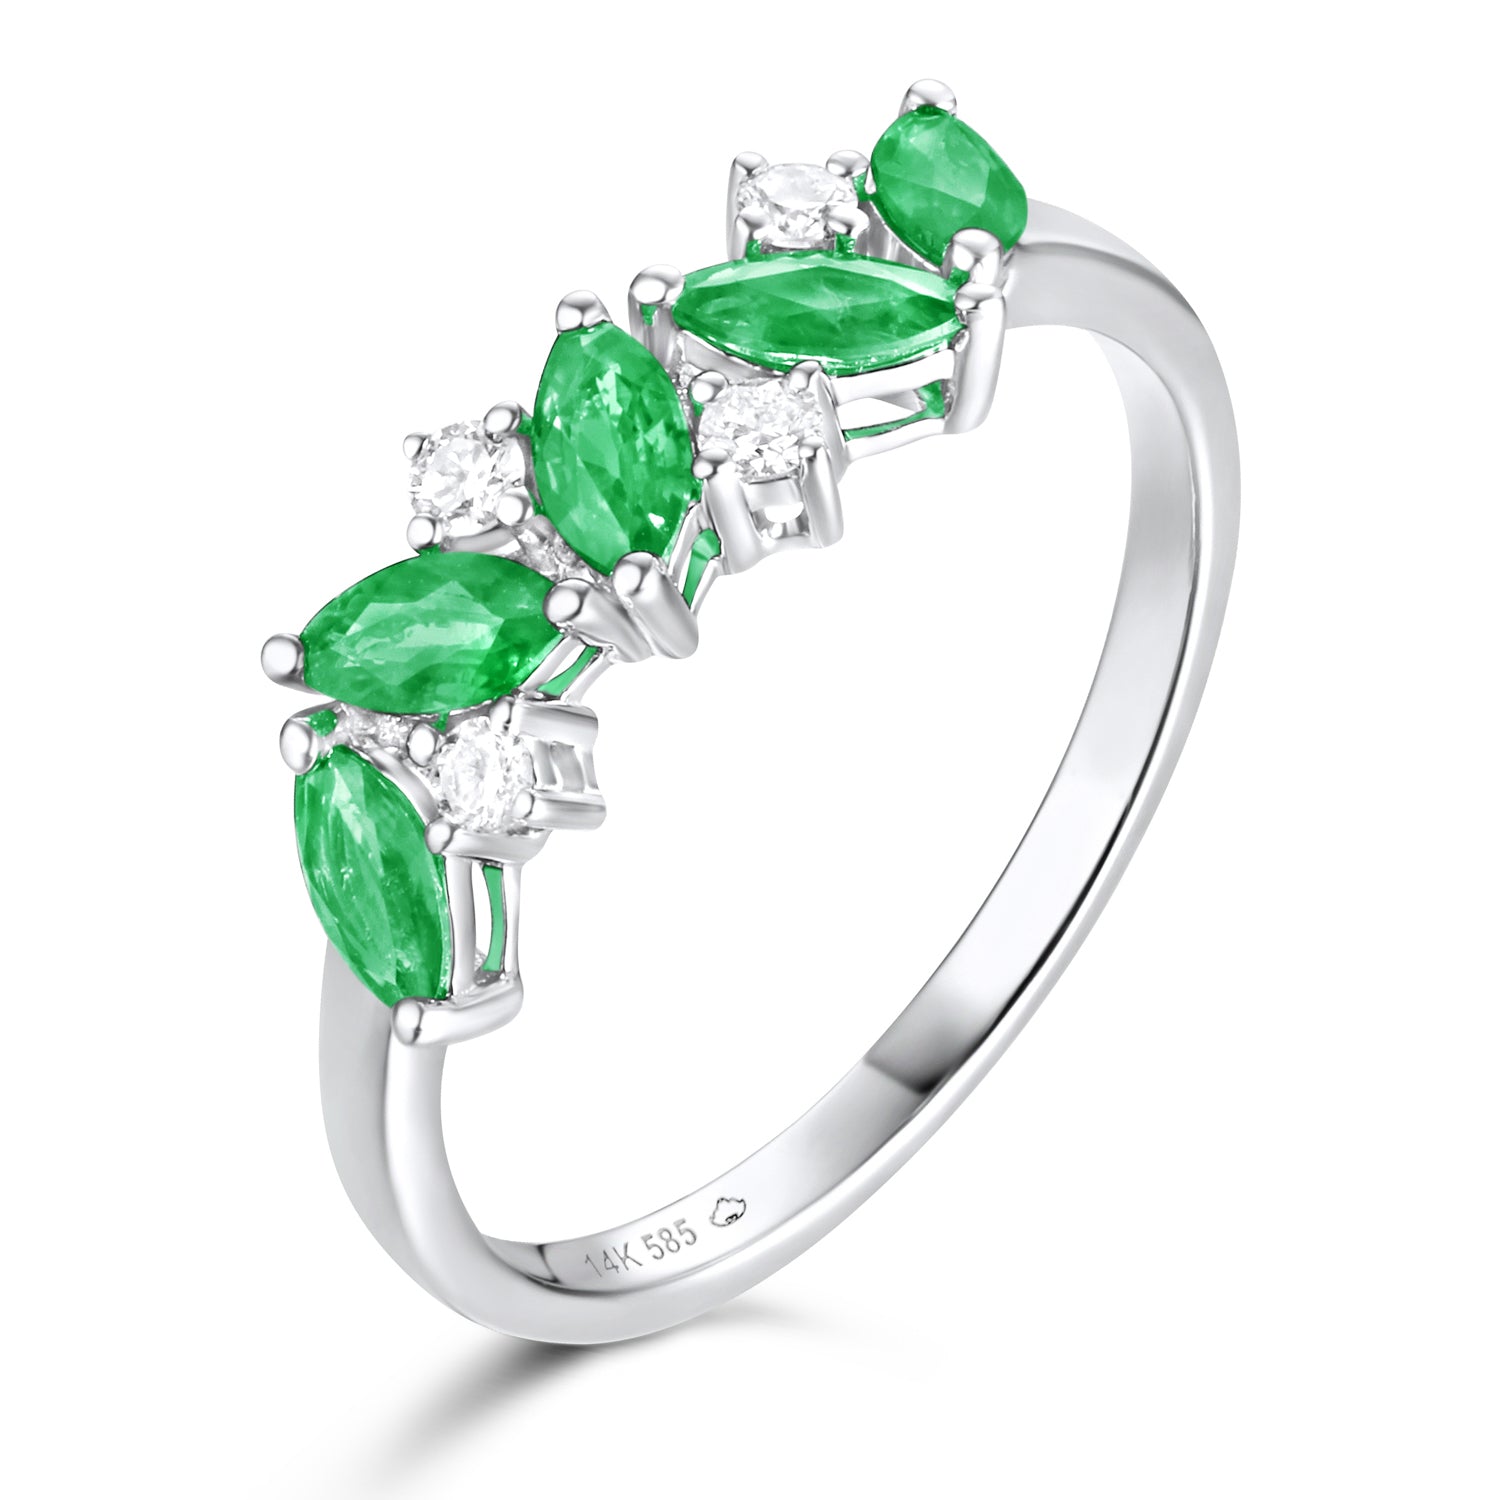 14K Rose Gold 2 Carat Emerald Cut Diamond Ring Set | Barkev's